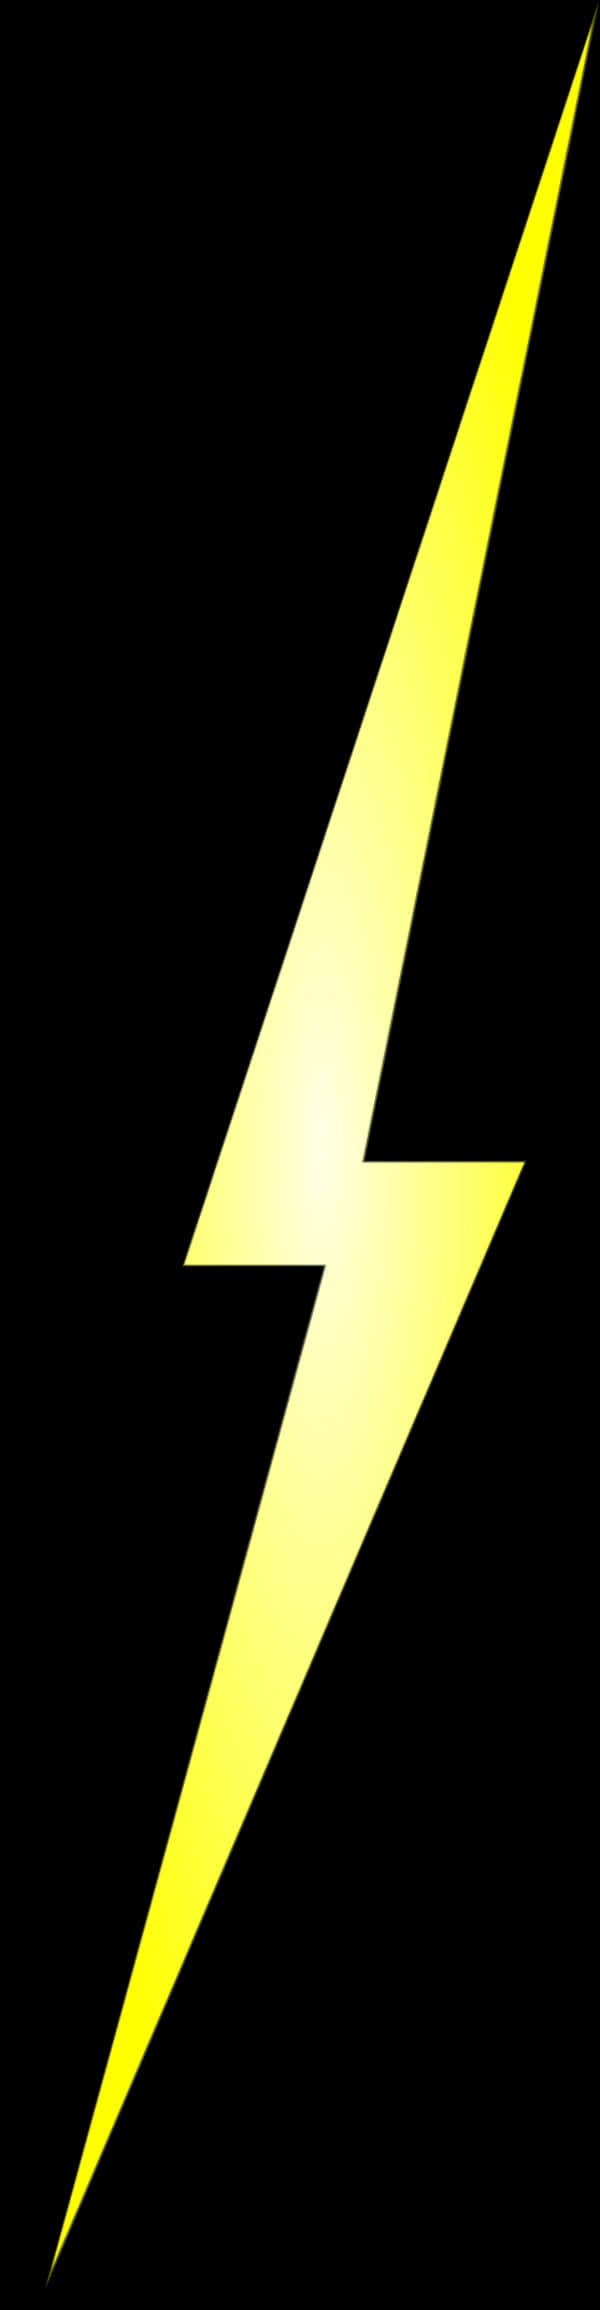 Yellow Lightning Bolt Black Background PNG